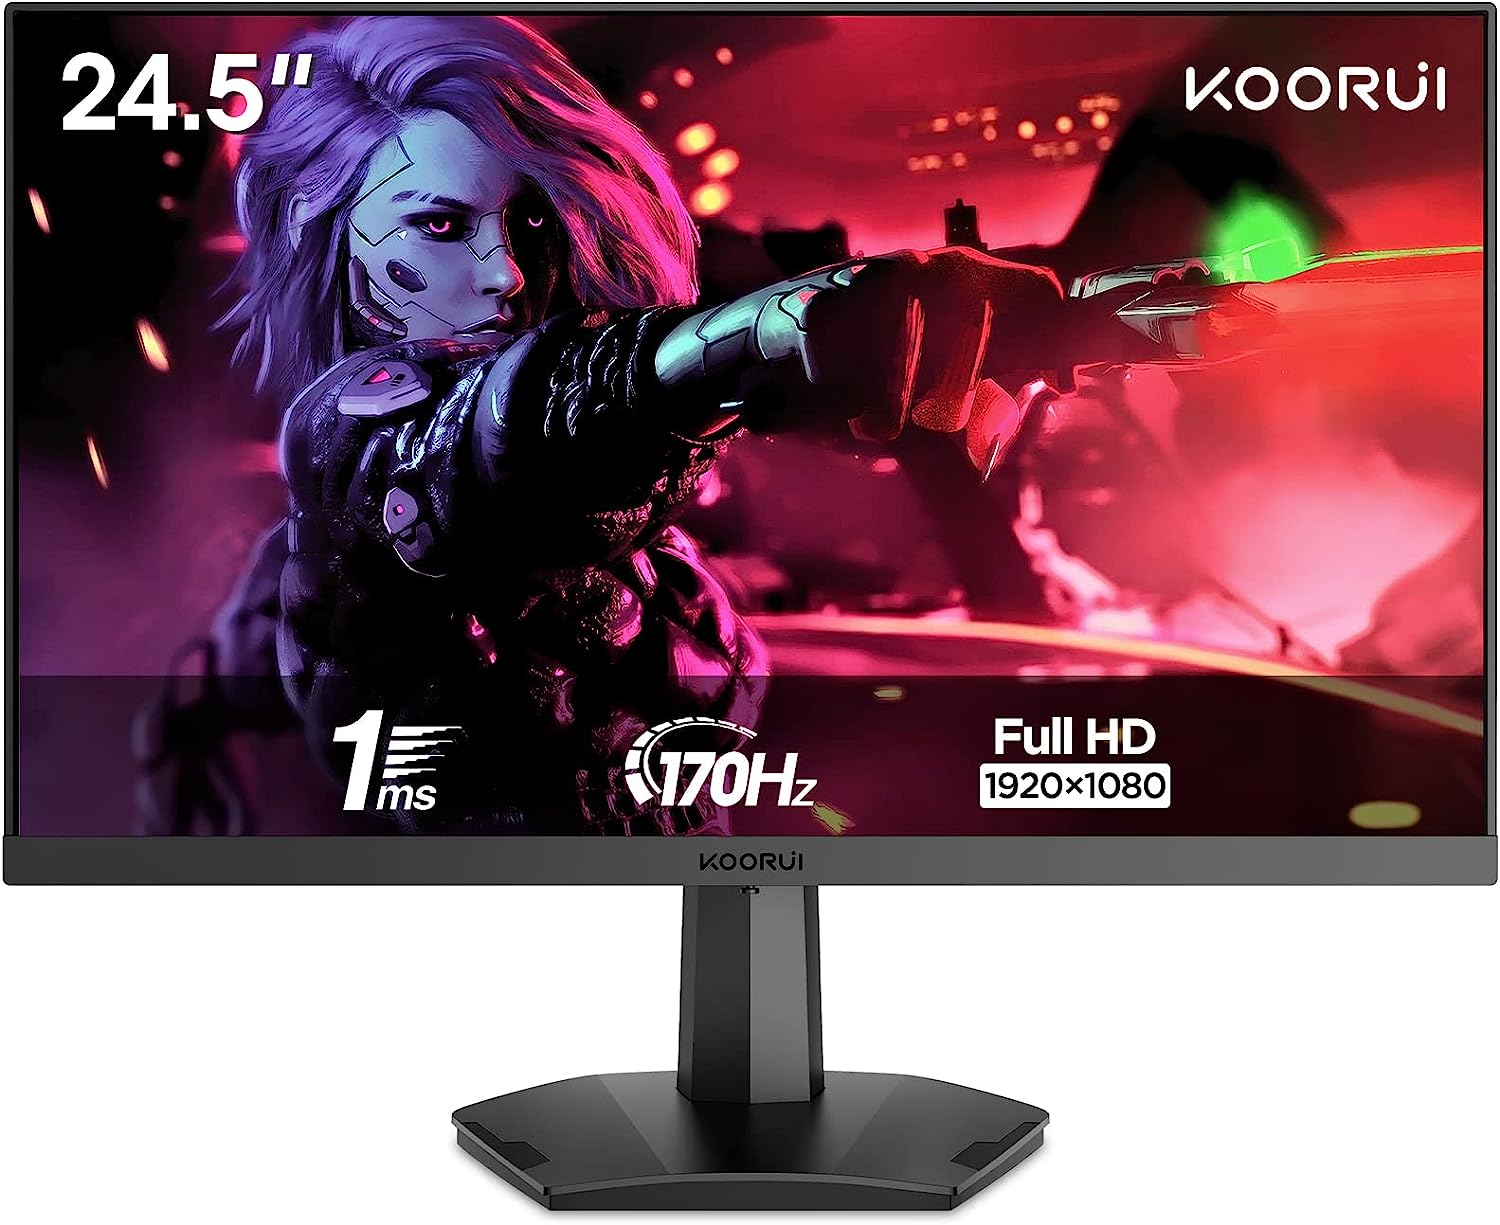 KOORUI 24.5 inch Gaming Monitor, FHD 1080P 144Hz/170Hz [...]